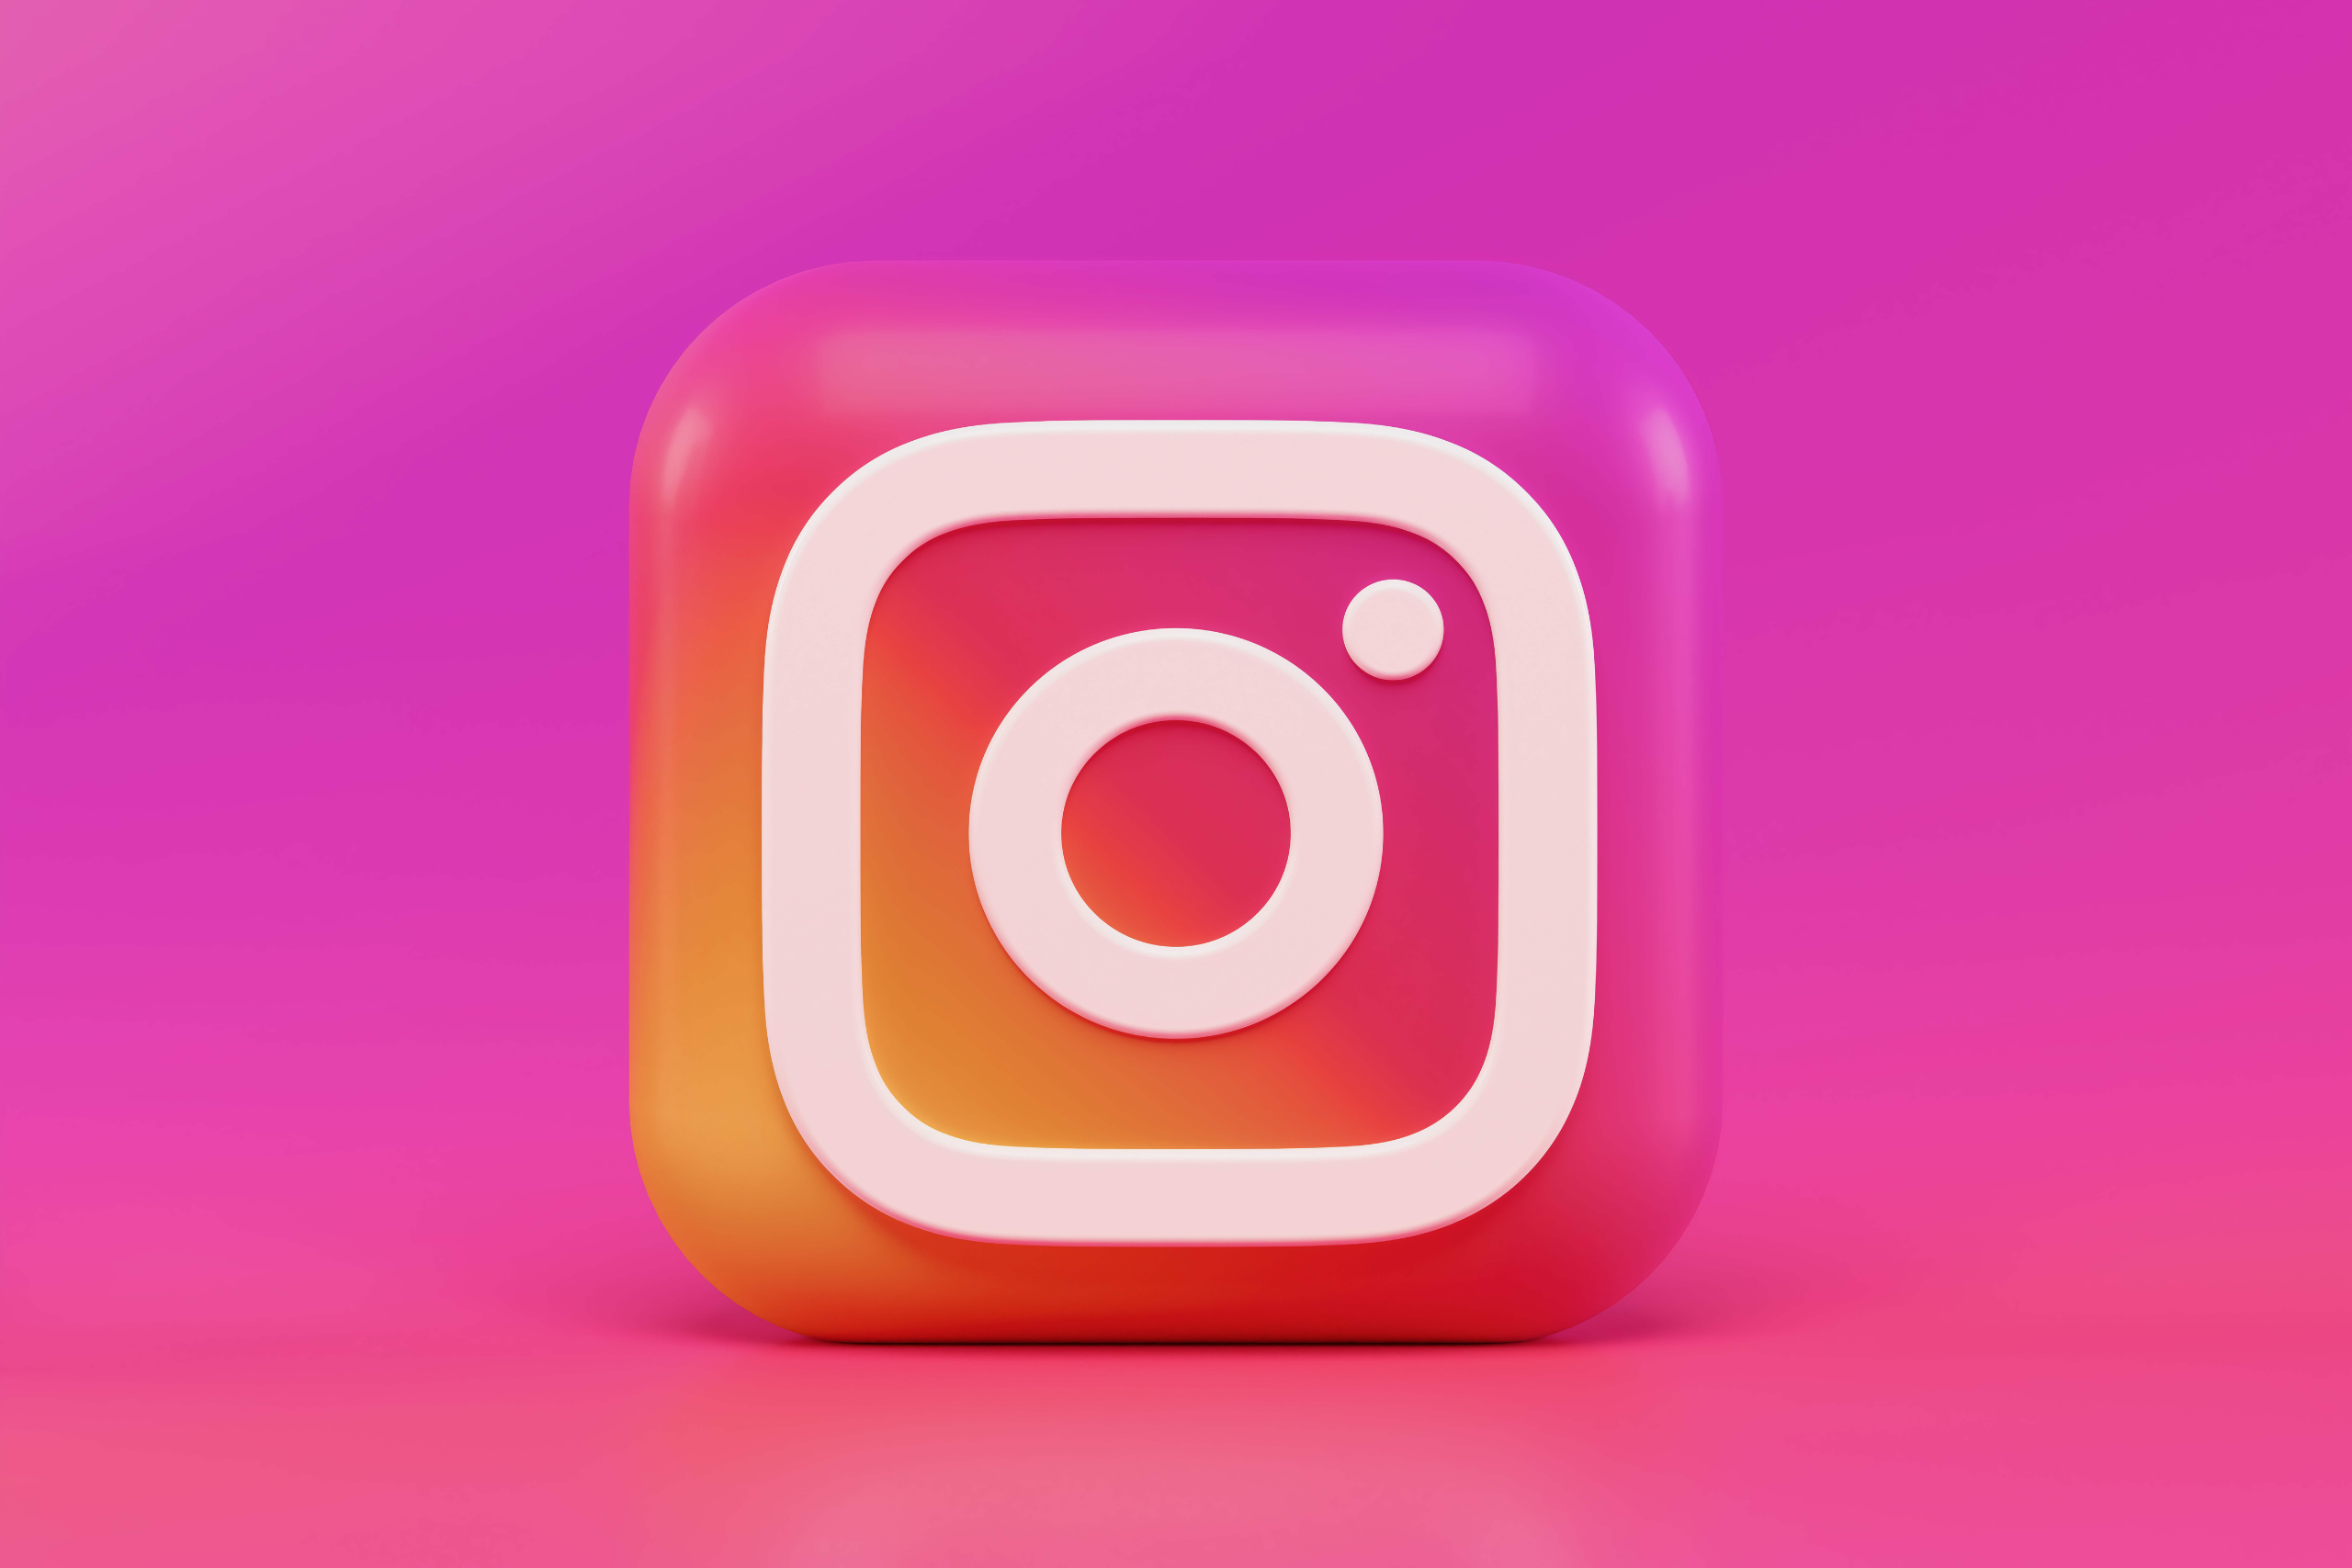 Content Marketing Agency in Essex: The Instagram Algorithm